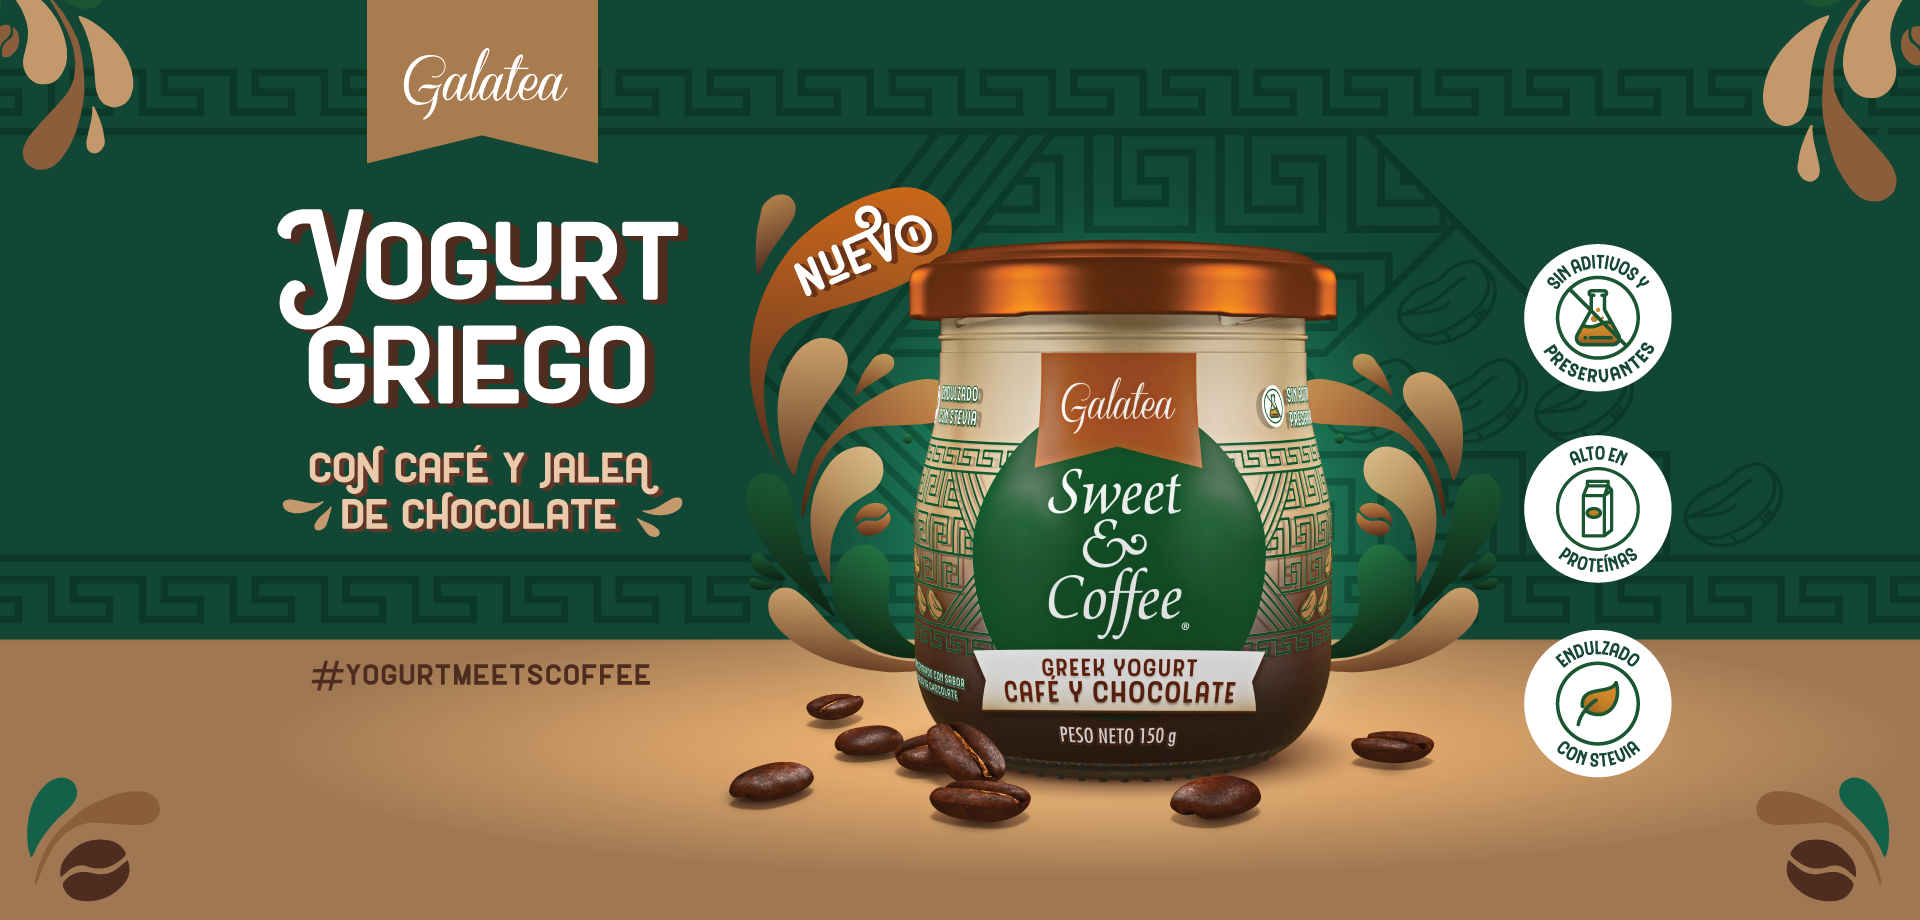 Yogurt Griego Sweet & Coffee Galatea